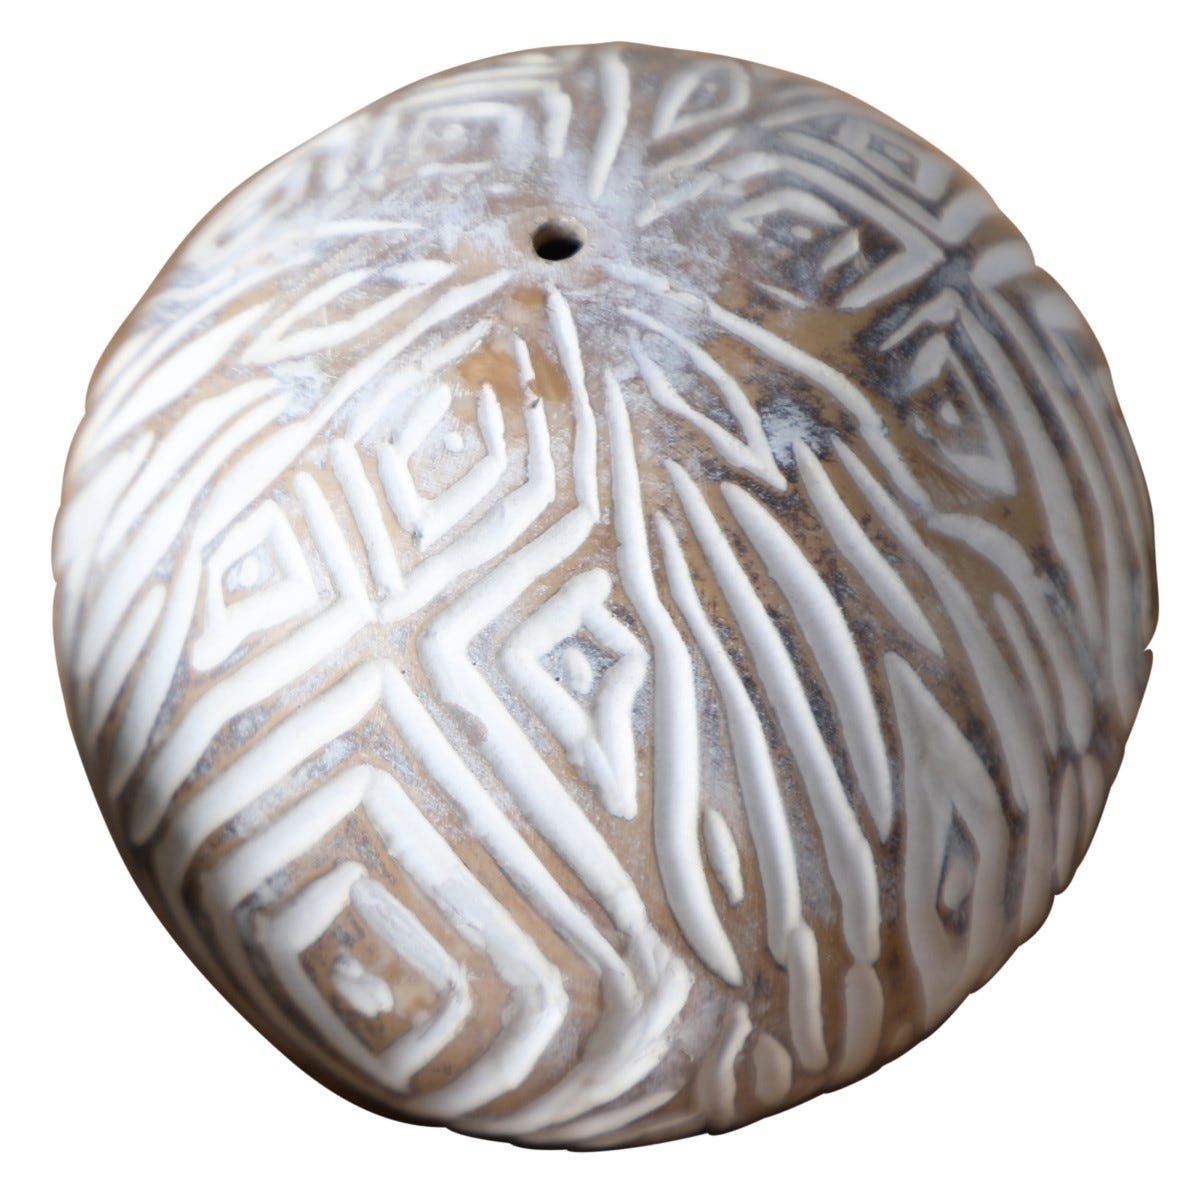 Signes Grimalt By SIGRIS - Bola decorativa Blanco de Resina, Bola de  Decoración Bola Decorativa Bolas Decorativas De Centro De Mesa 8x8x8cm